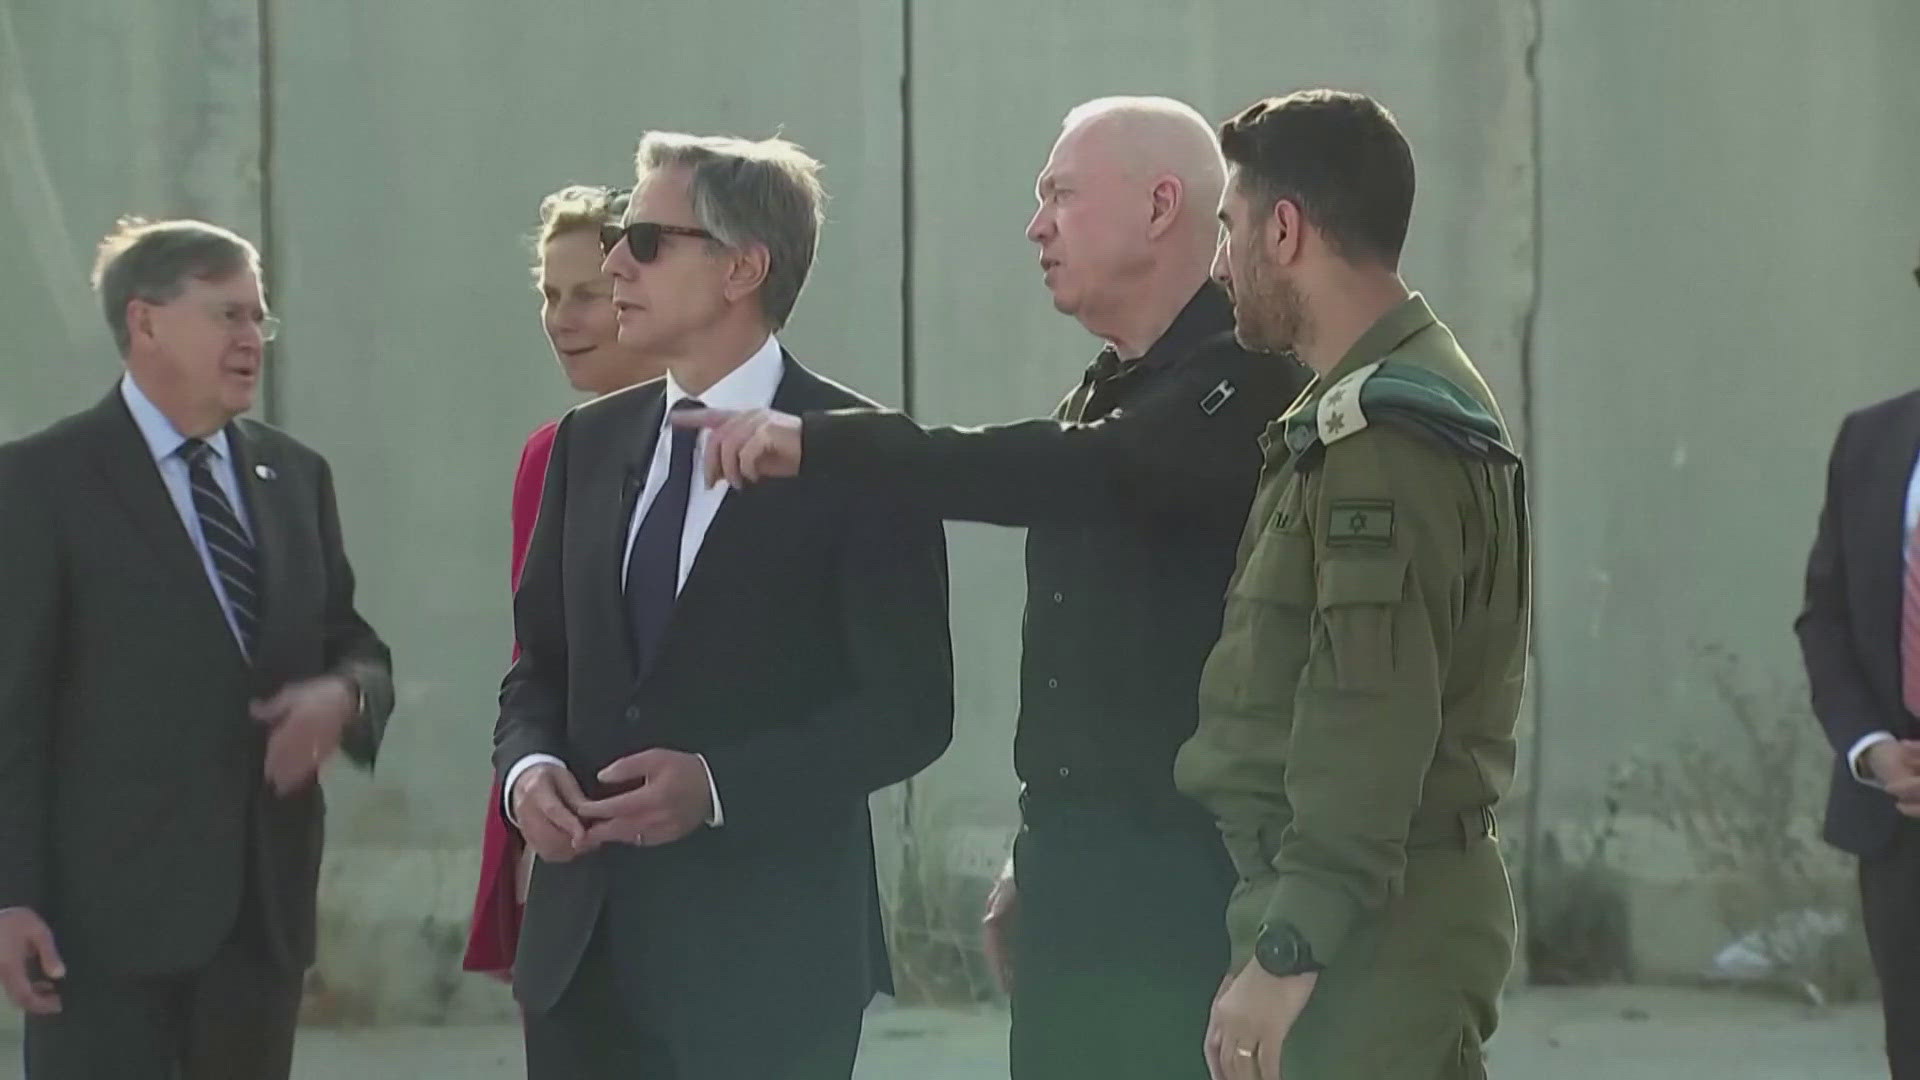 Antony Blinken met with Israeli leaders over his push for a cease-fire deal between Israel and Hamas.